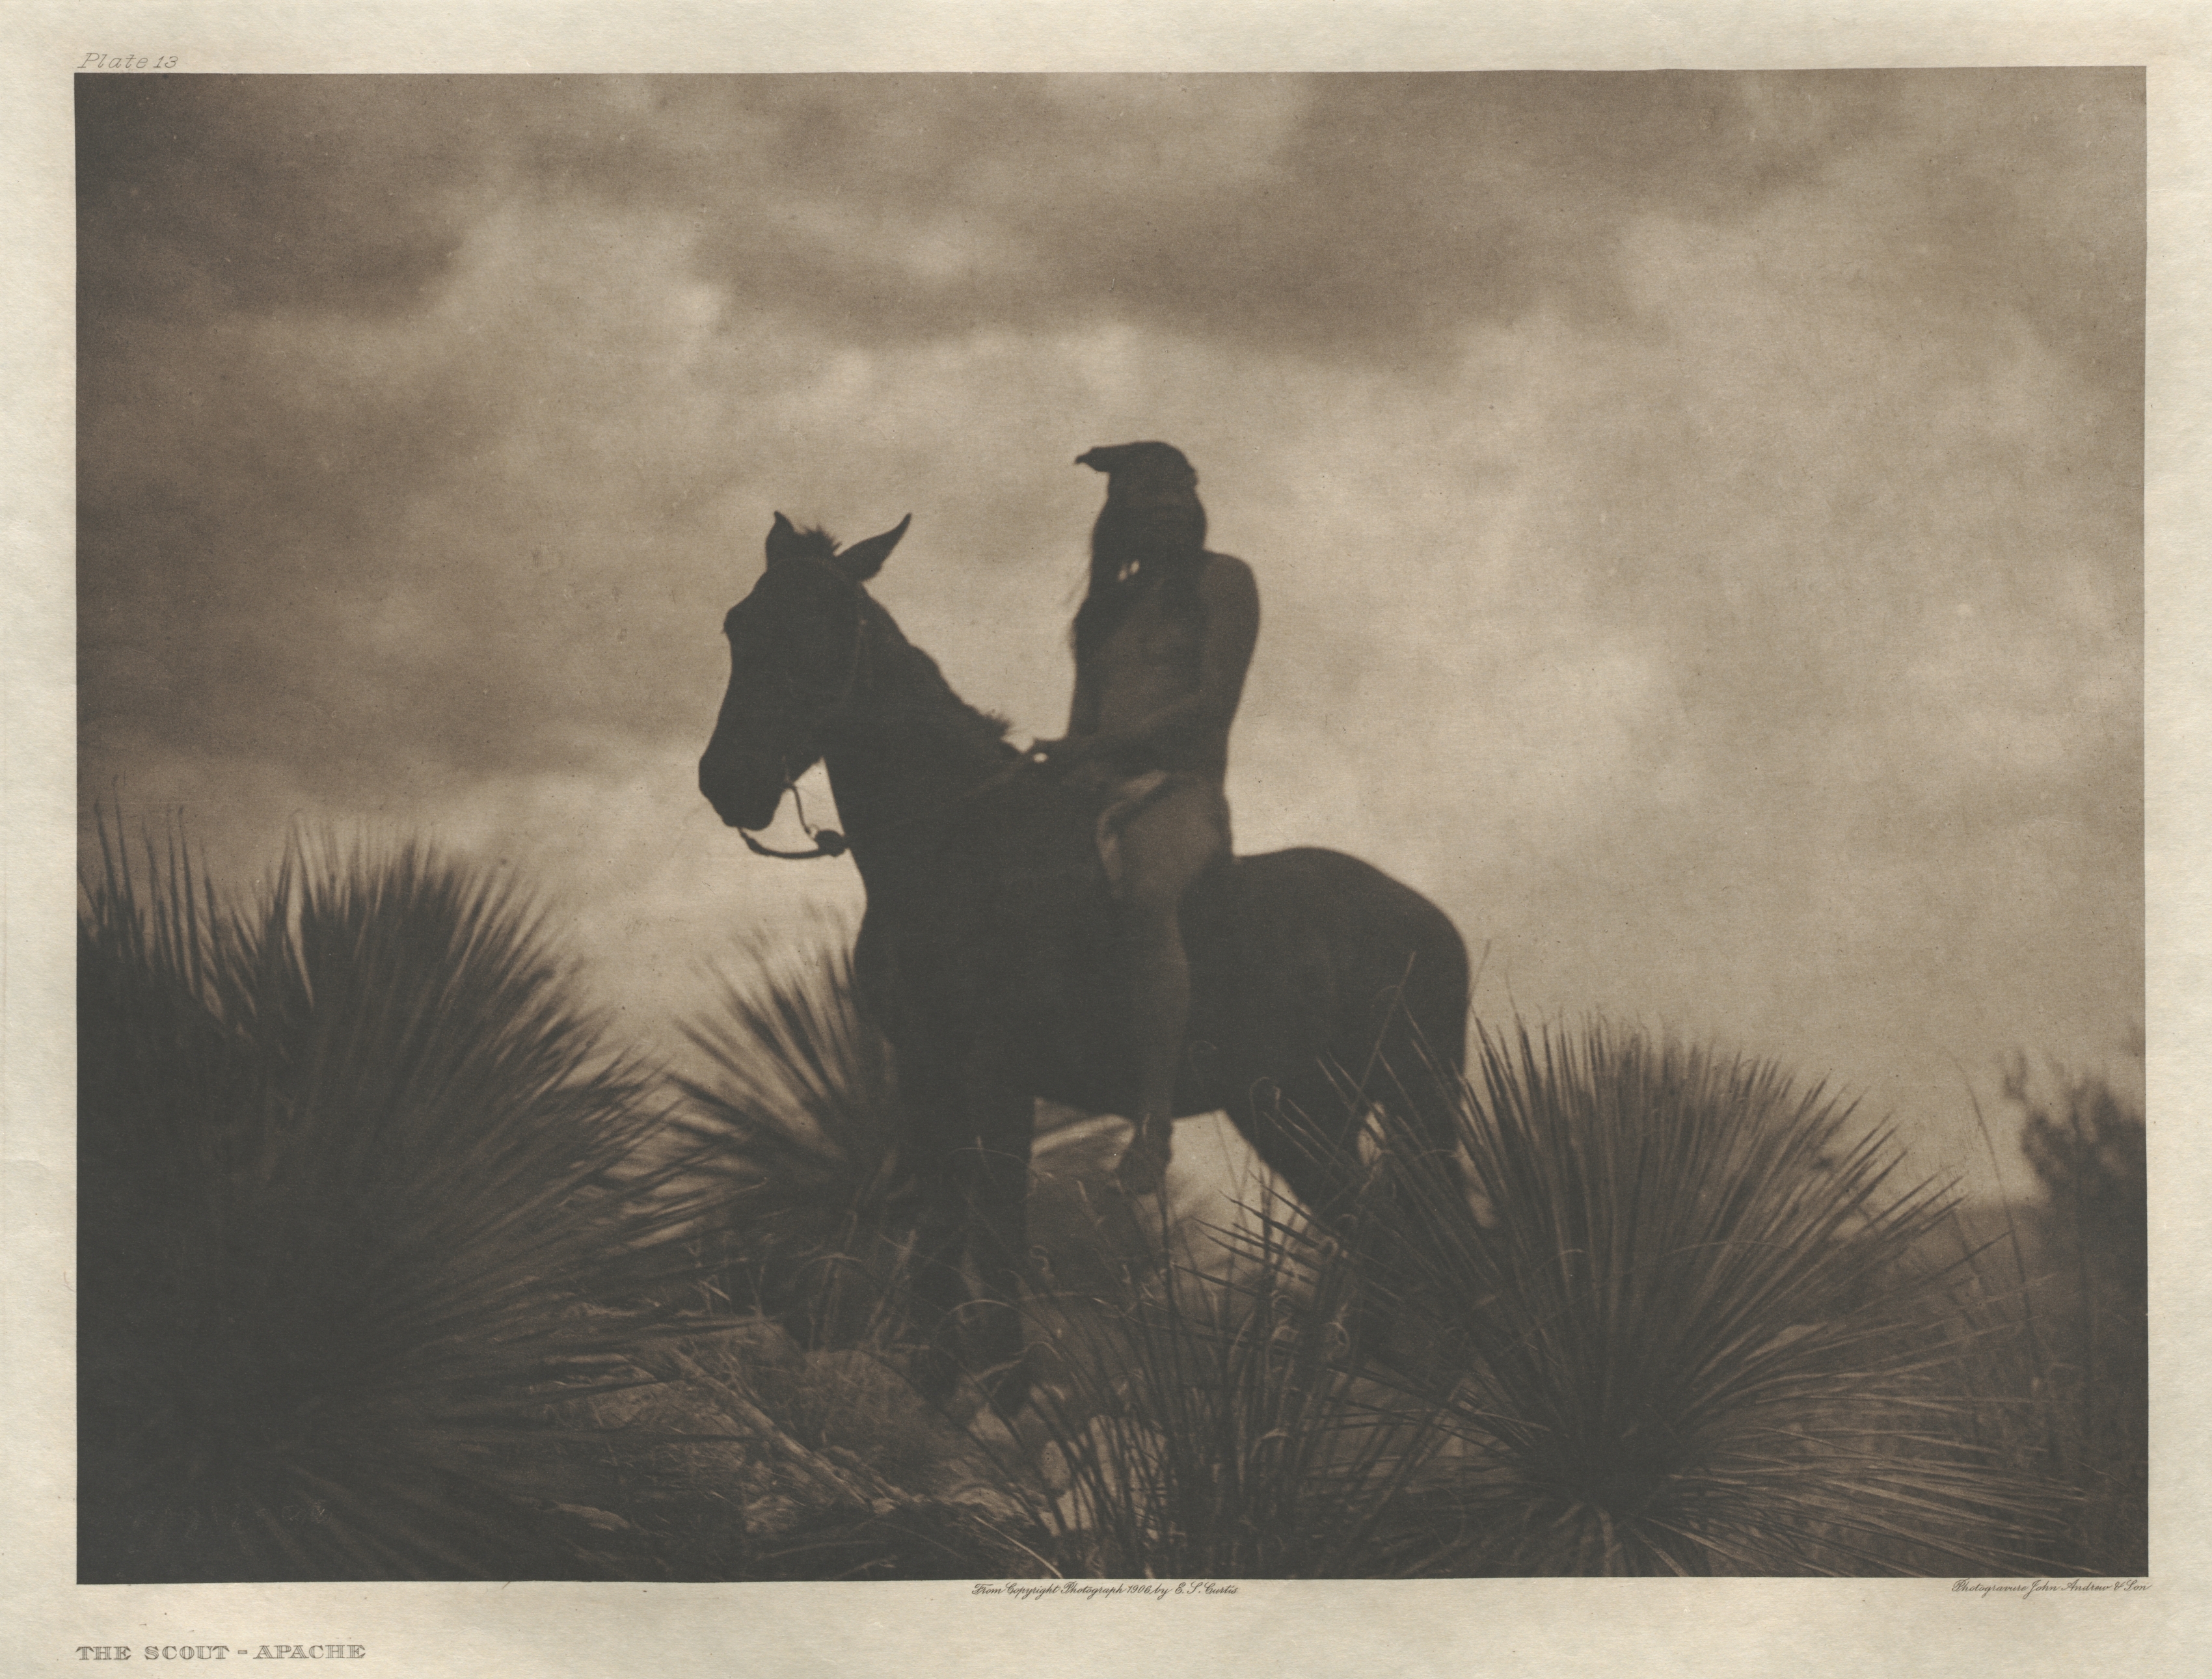 Portfolio I, Plate 13: The Scout-Apache